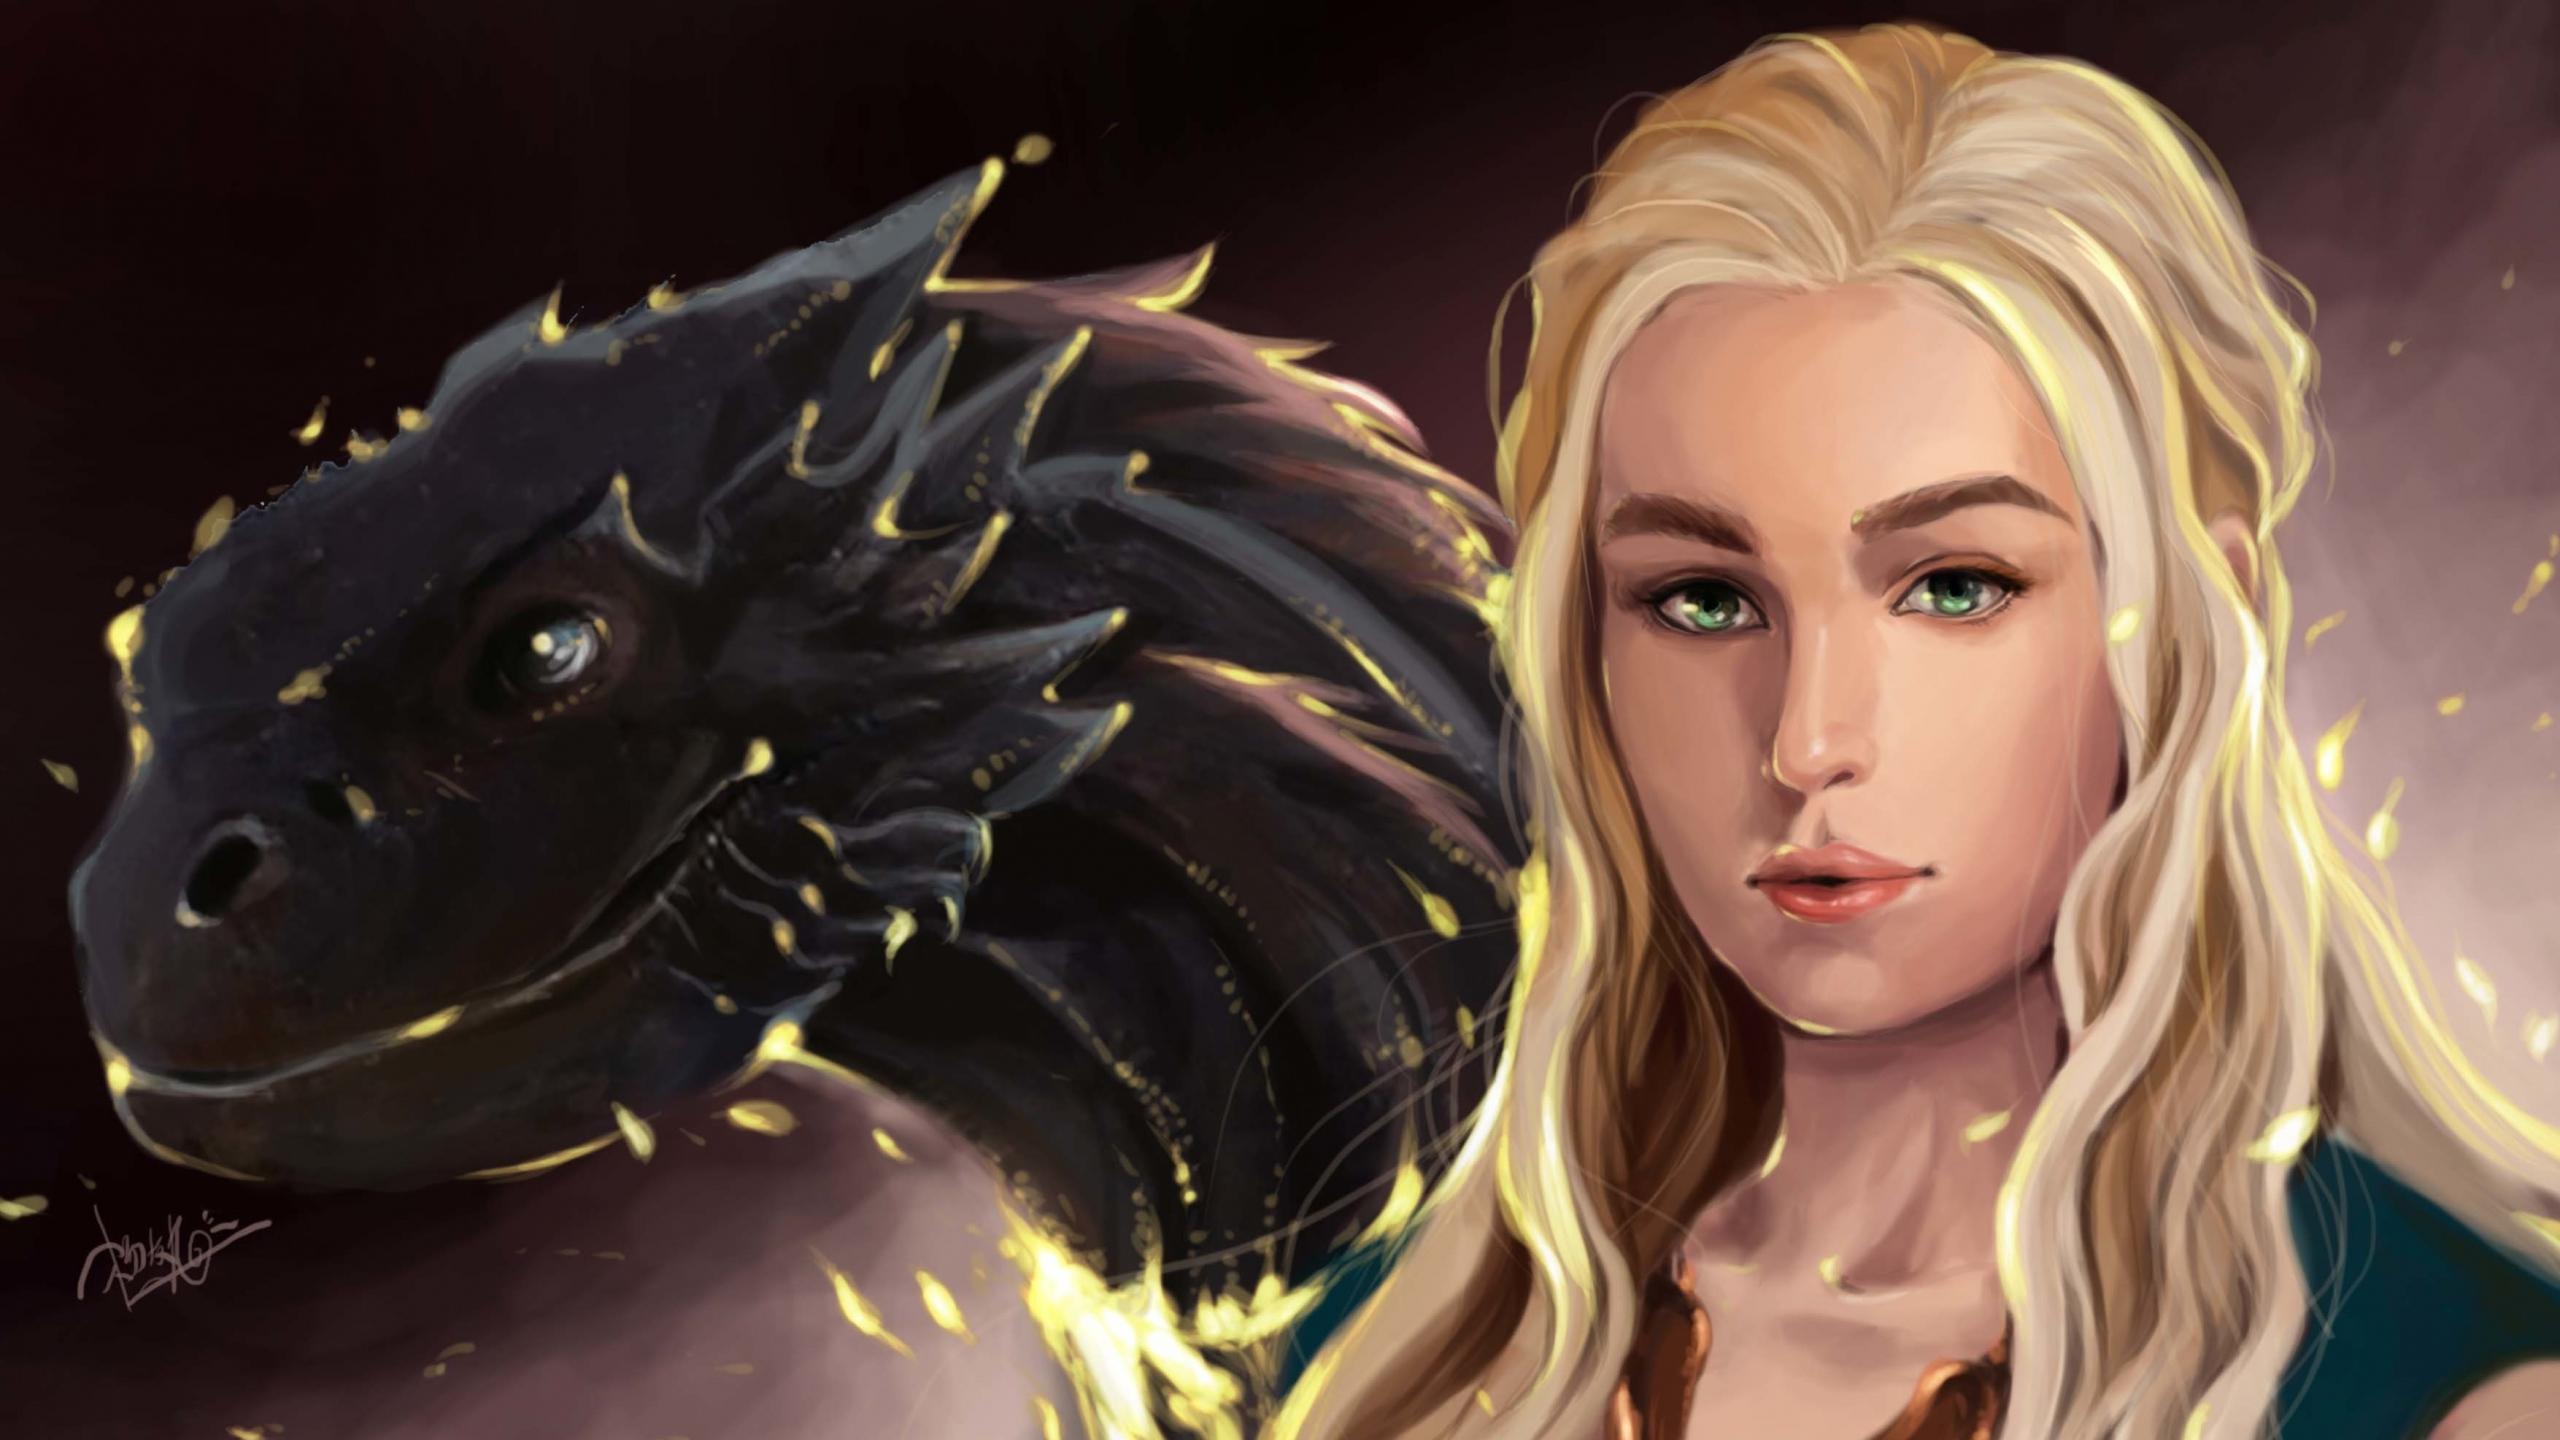 Wallpaper of Game of Thrones, Daenerys Targaryen, Emilia Clarke